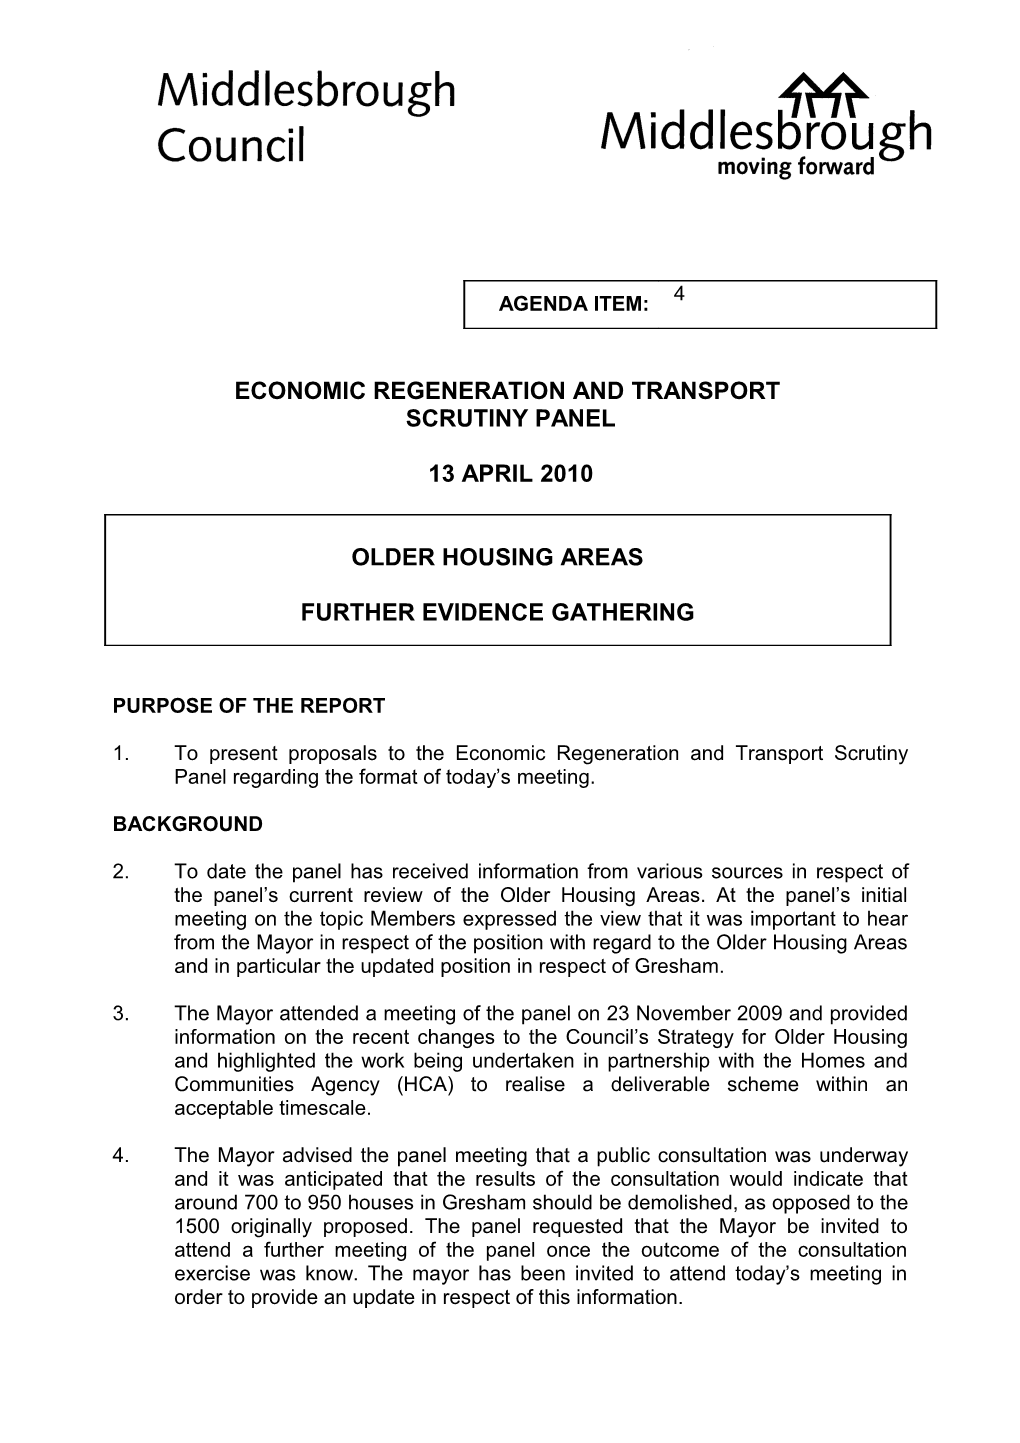 Economic Regeneration and Transport